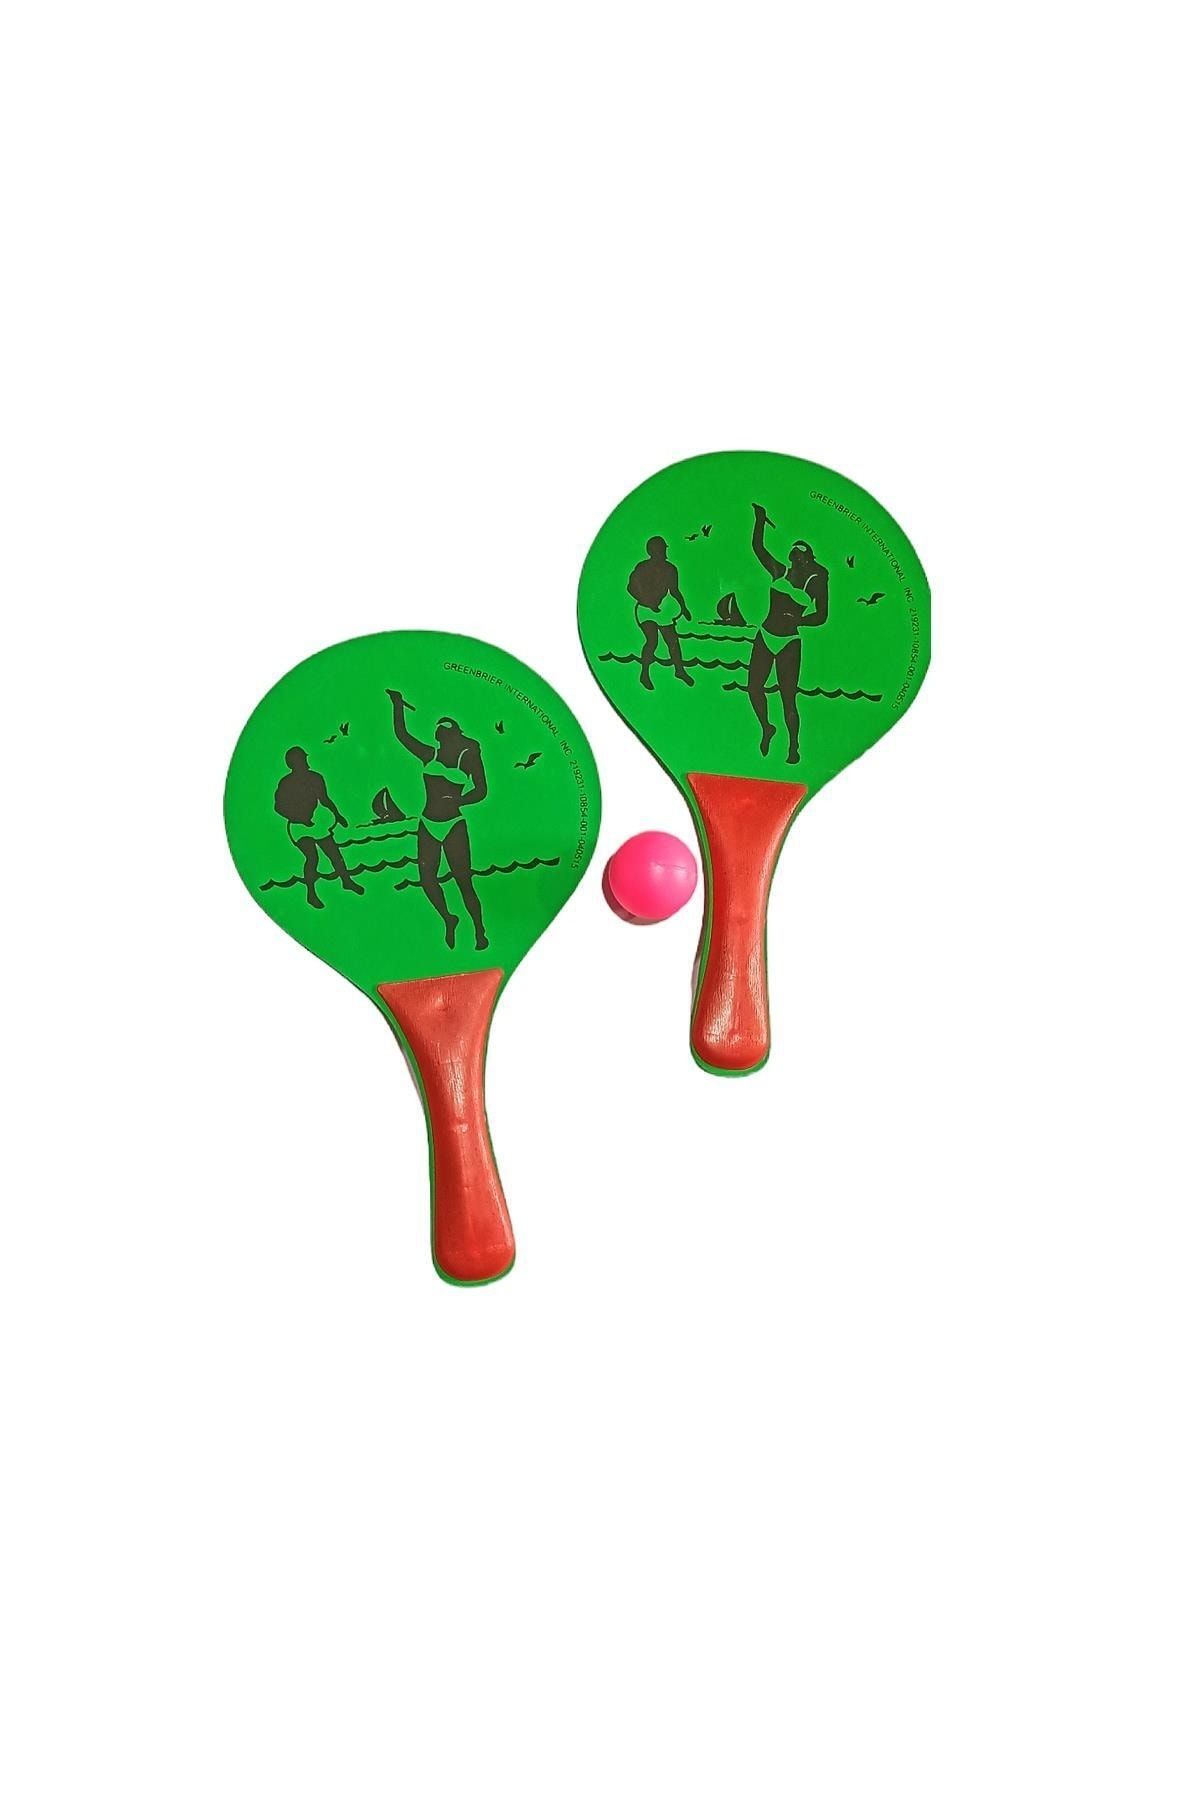 Avessa Plaj Tenis Raket Seti Çocuk Boy (2 Raket 1 Top) Yeşil - Kırmızı